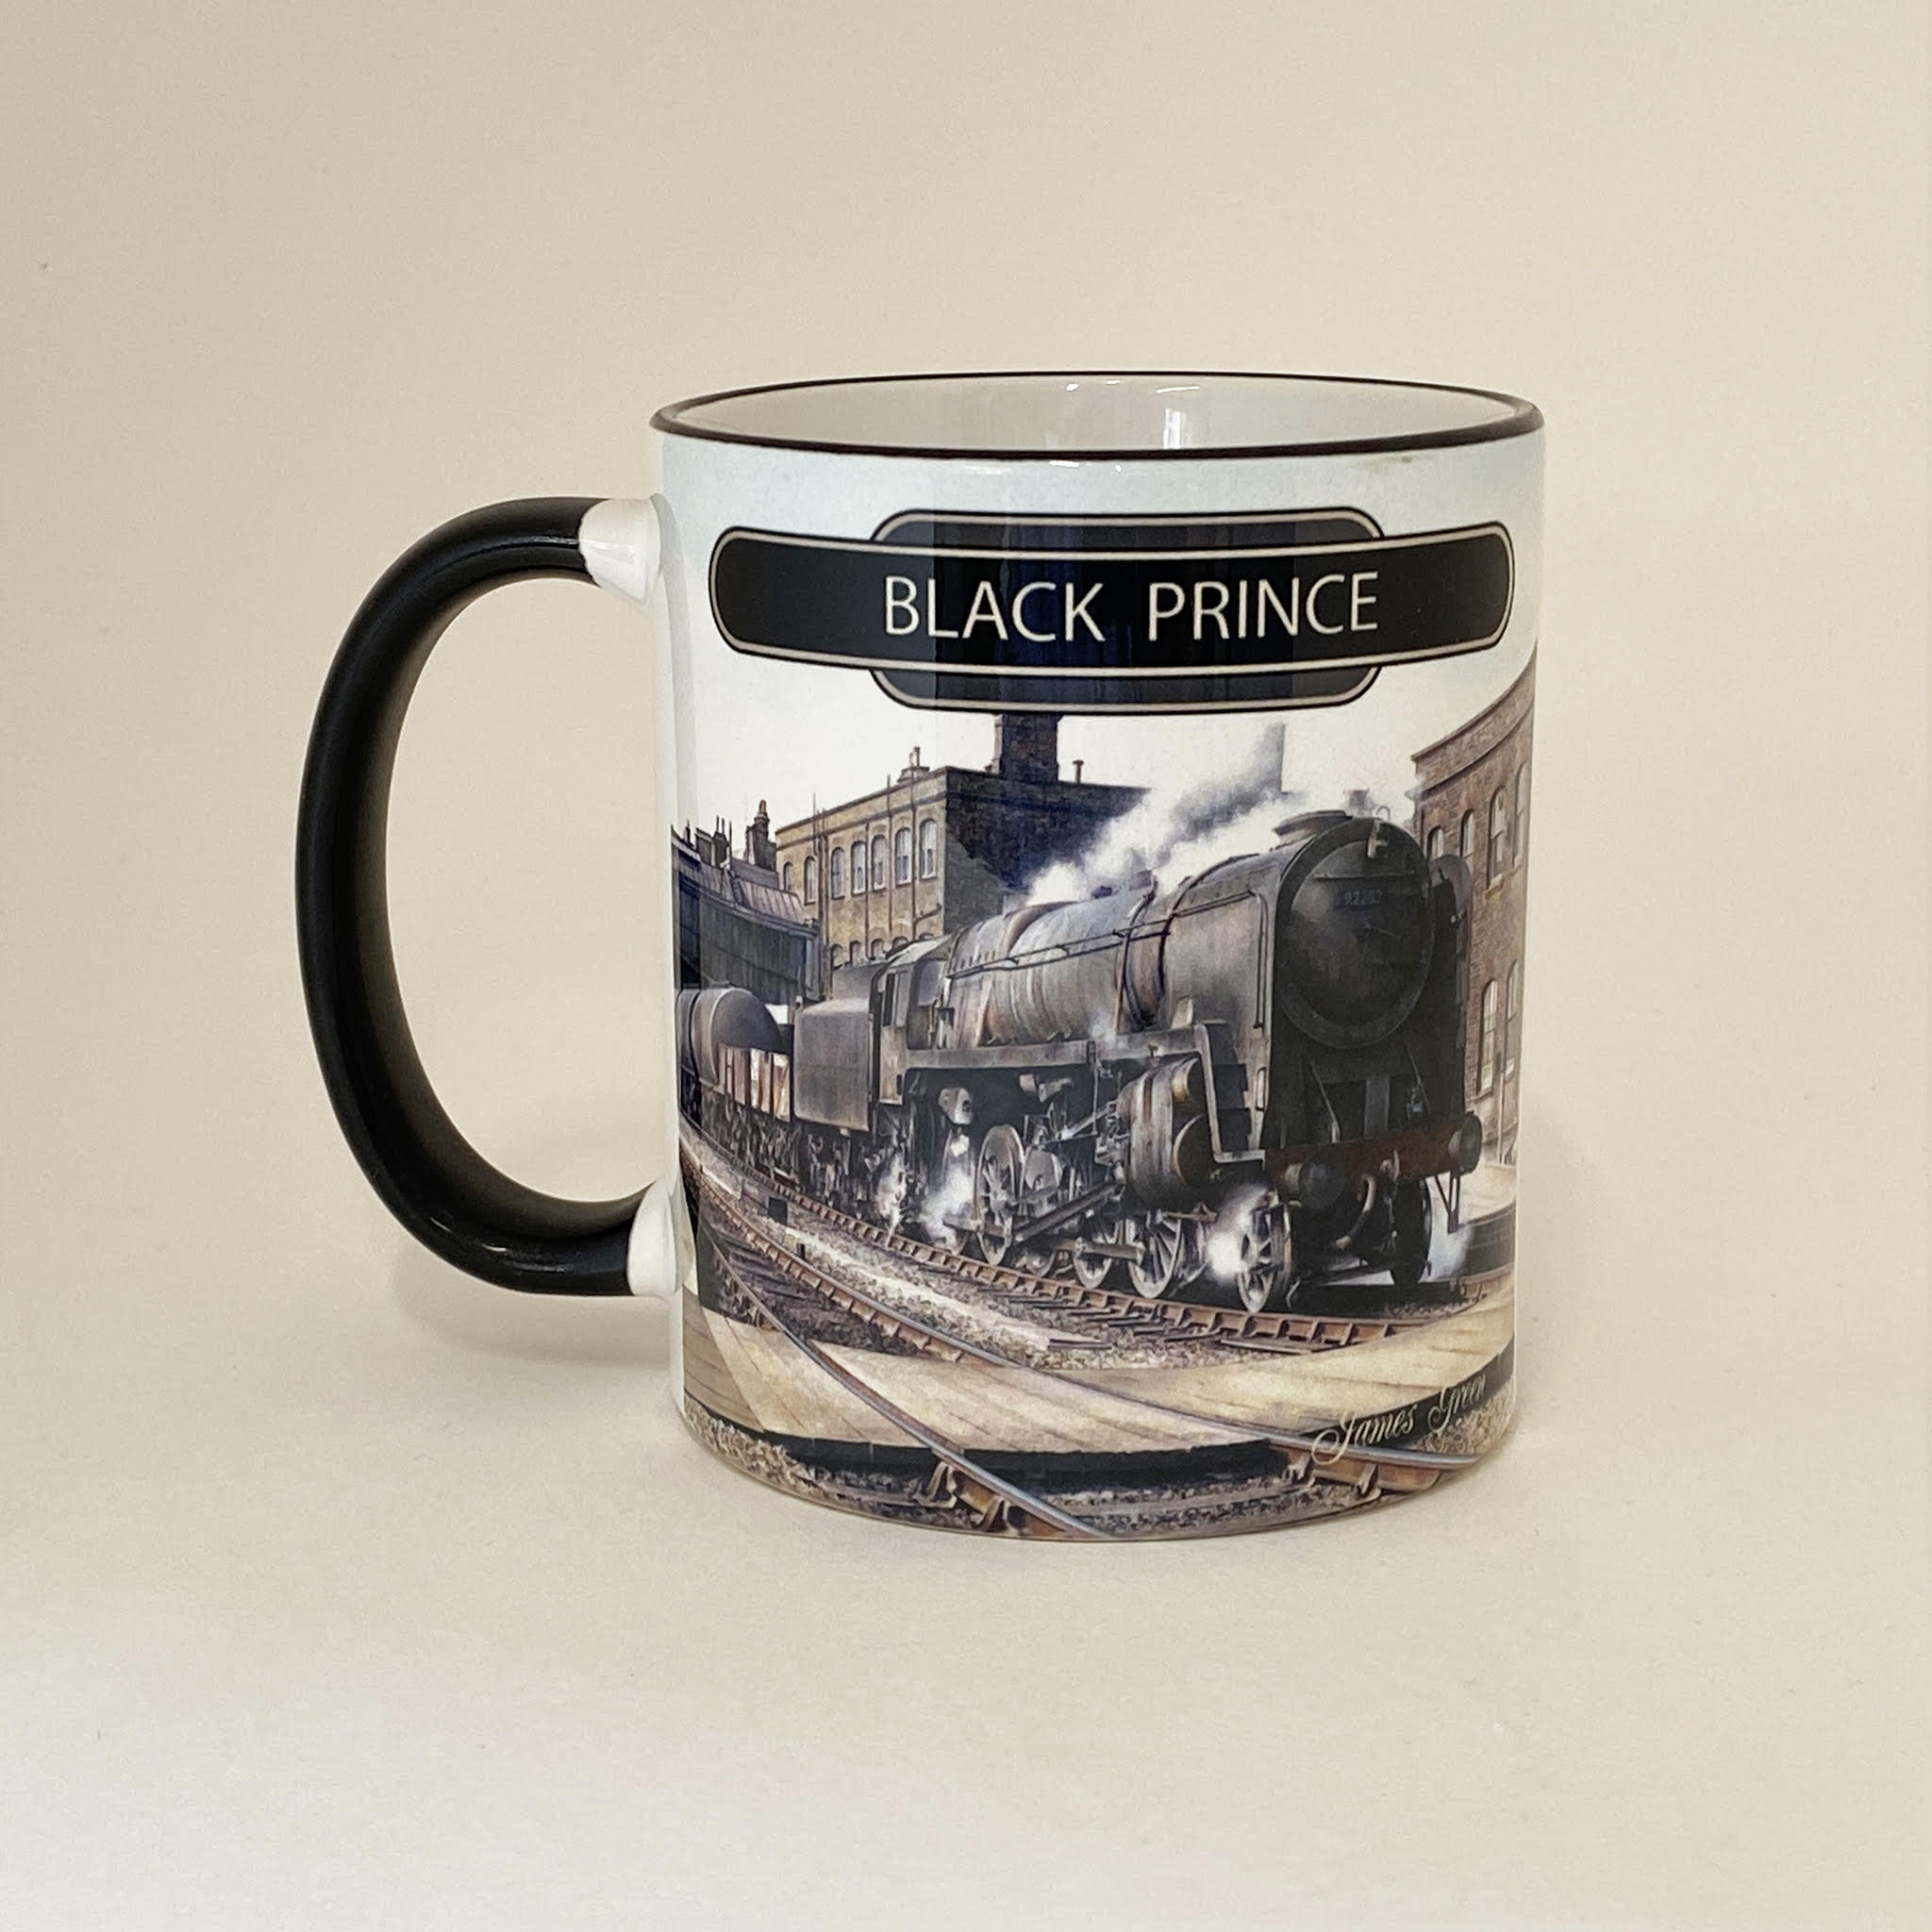 15% OFF RRP is £14.99 Black Prince MUG